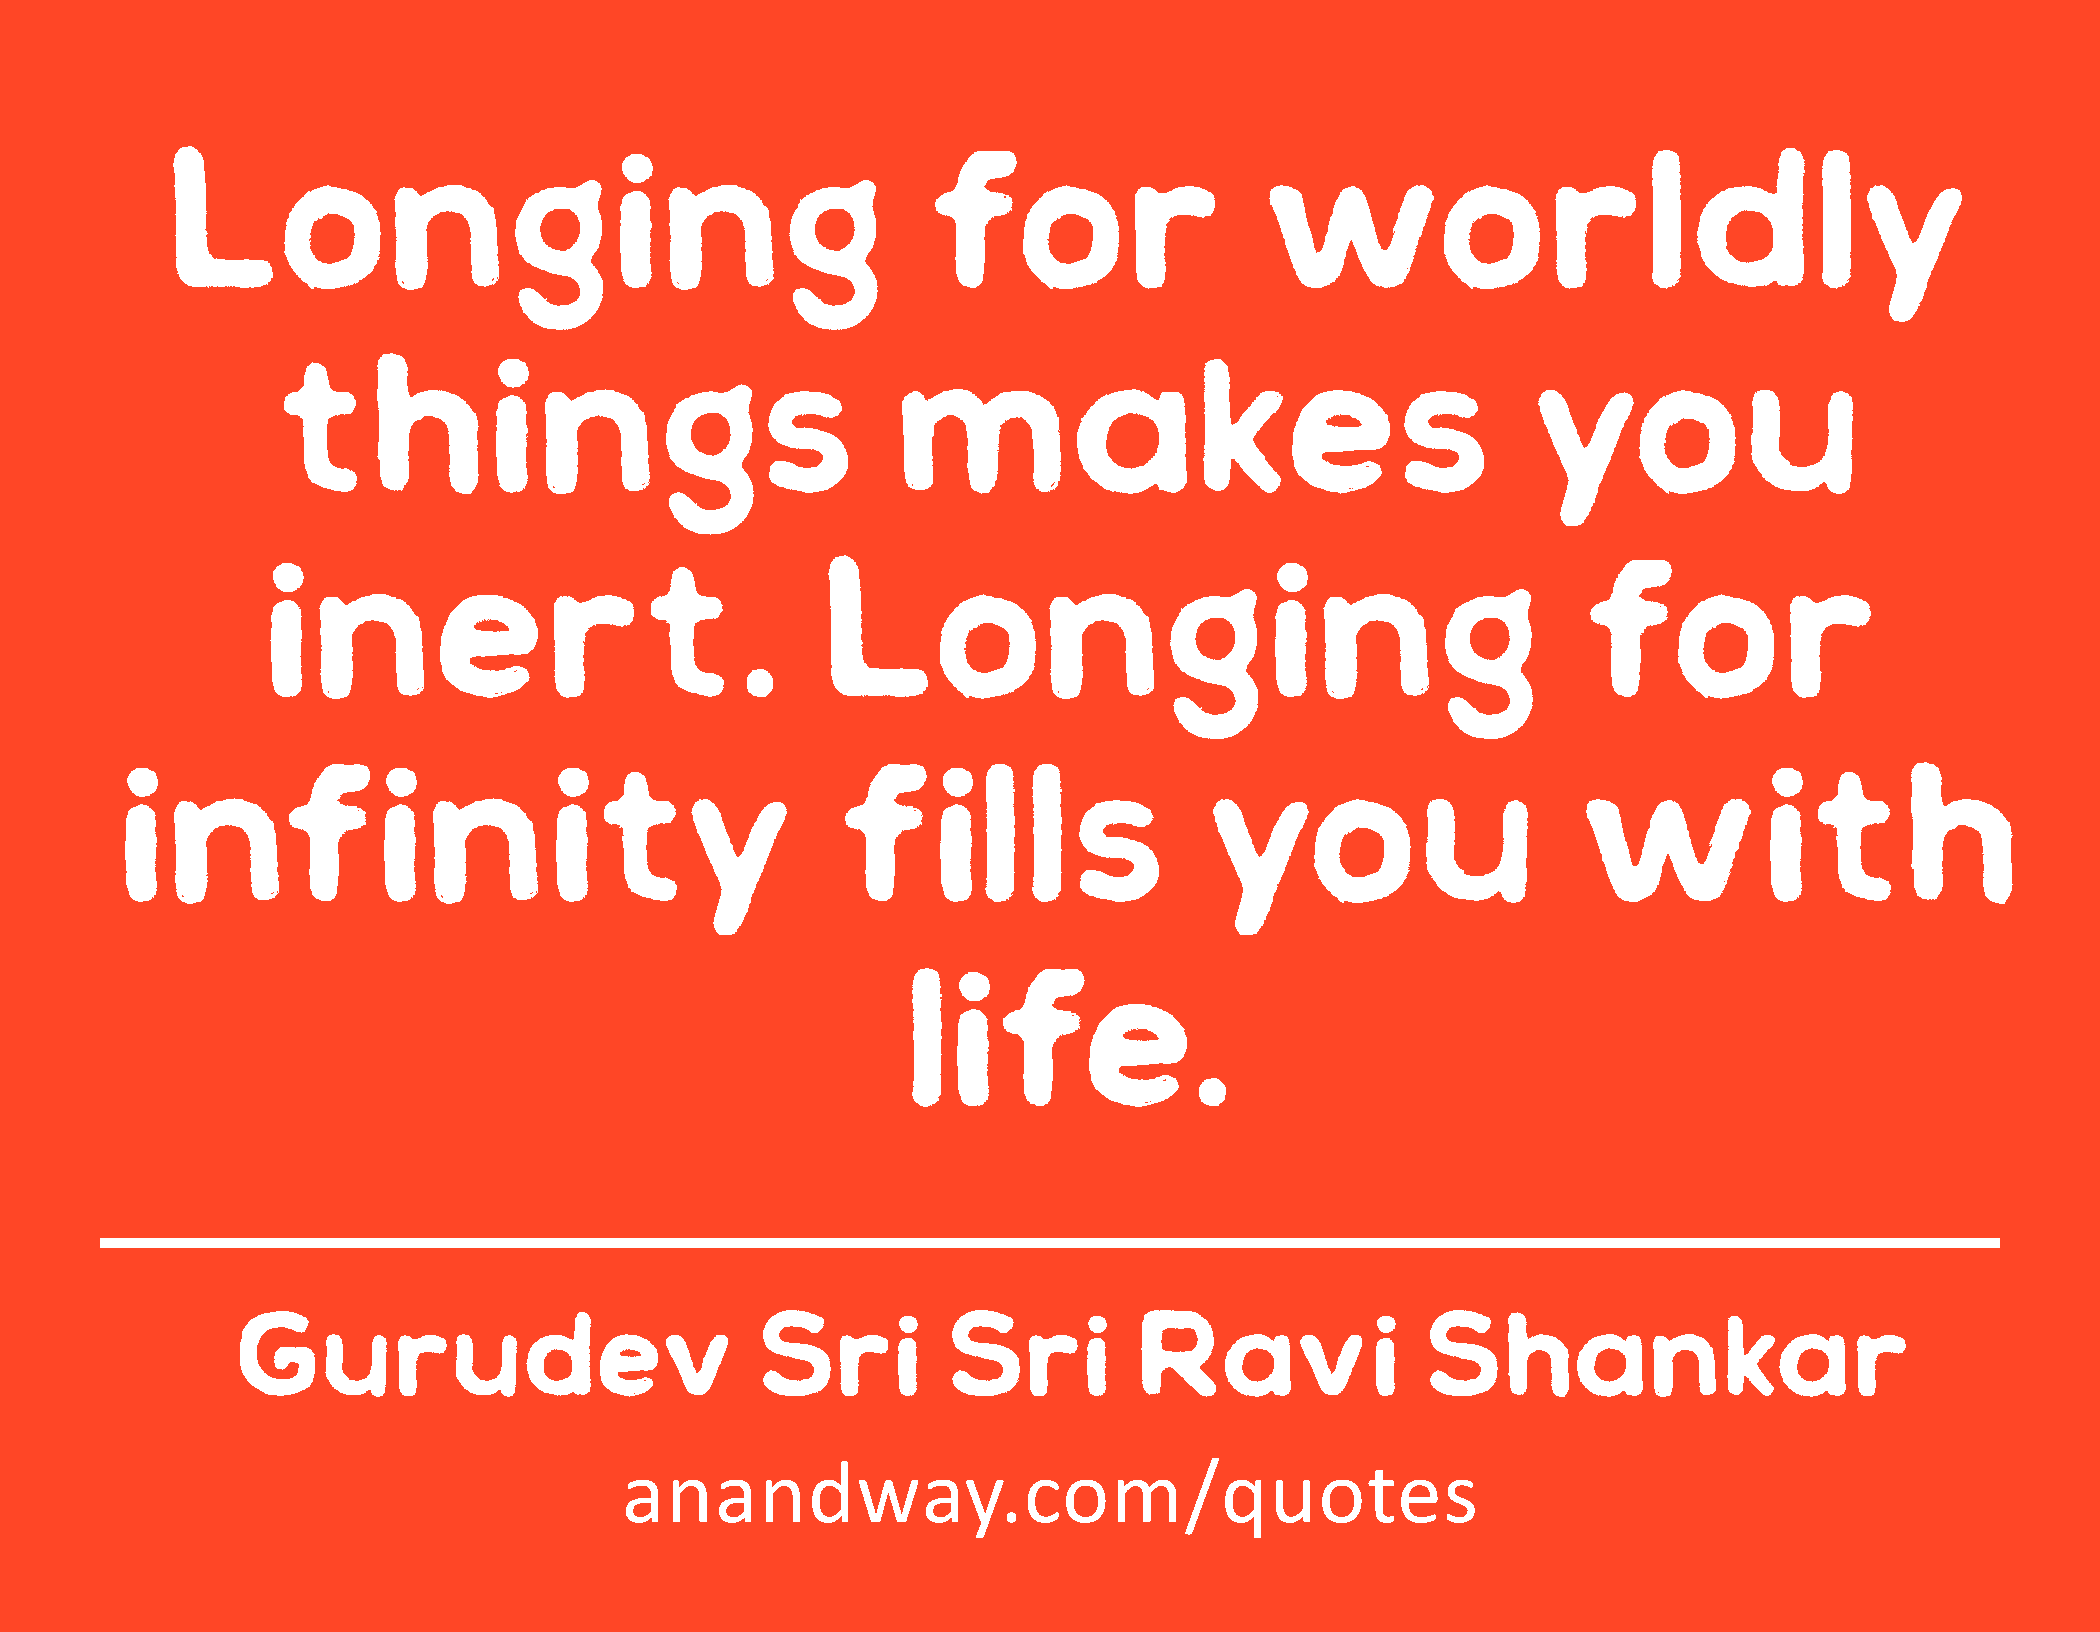 Longing for worldly things makes you inert. Longing for infinity fills you with life. 
 -Gurudev Sri Sri Ravi Shankar